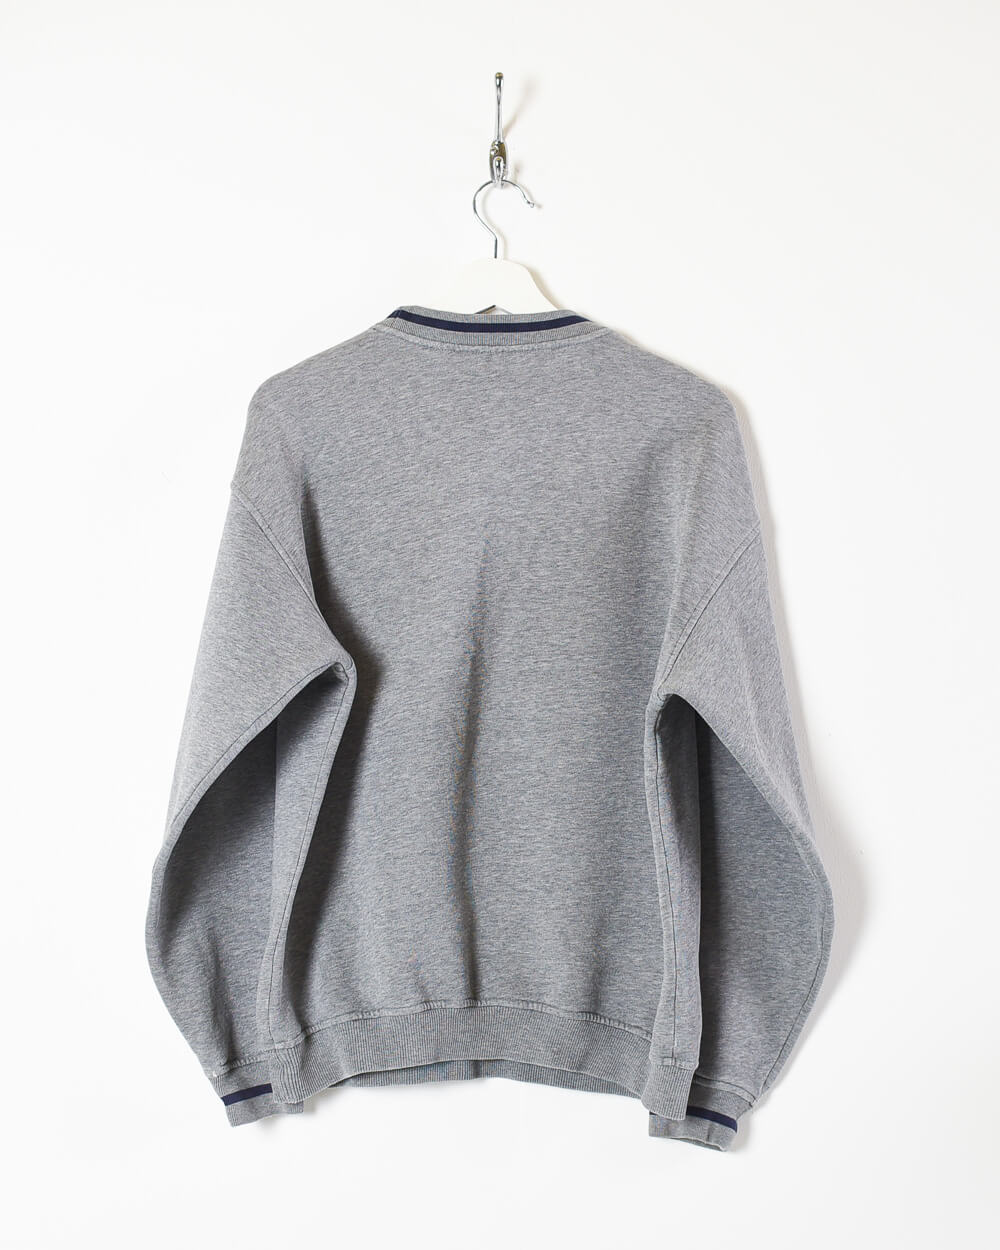 Stone Fila Sweatshirt - Small